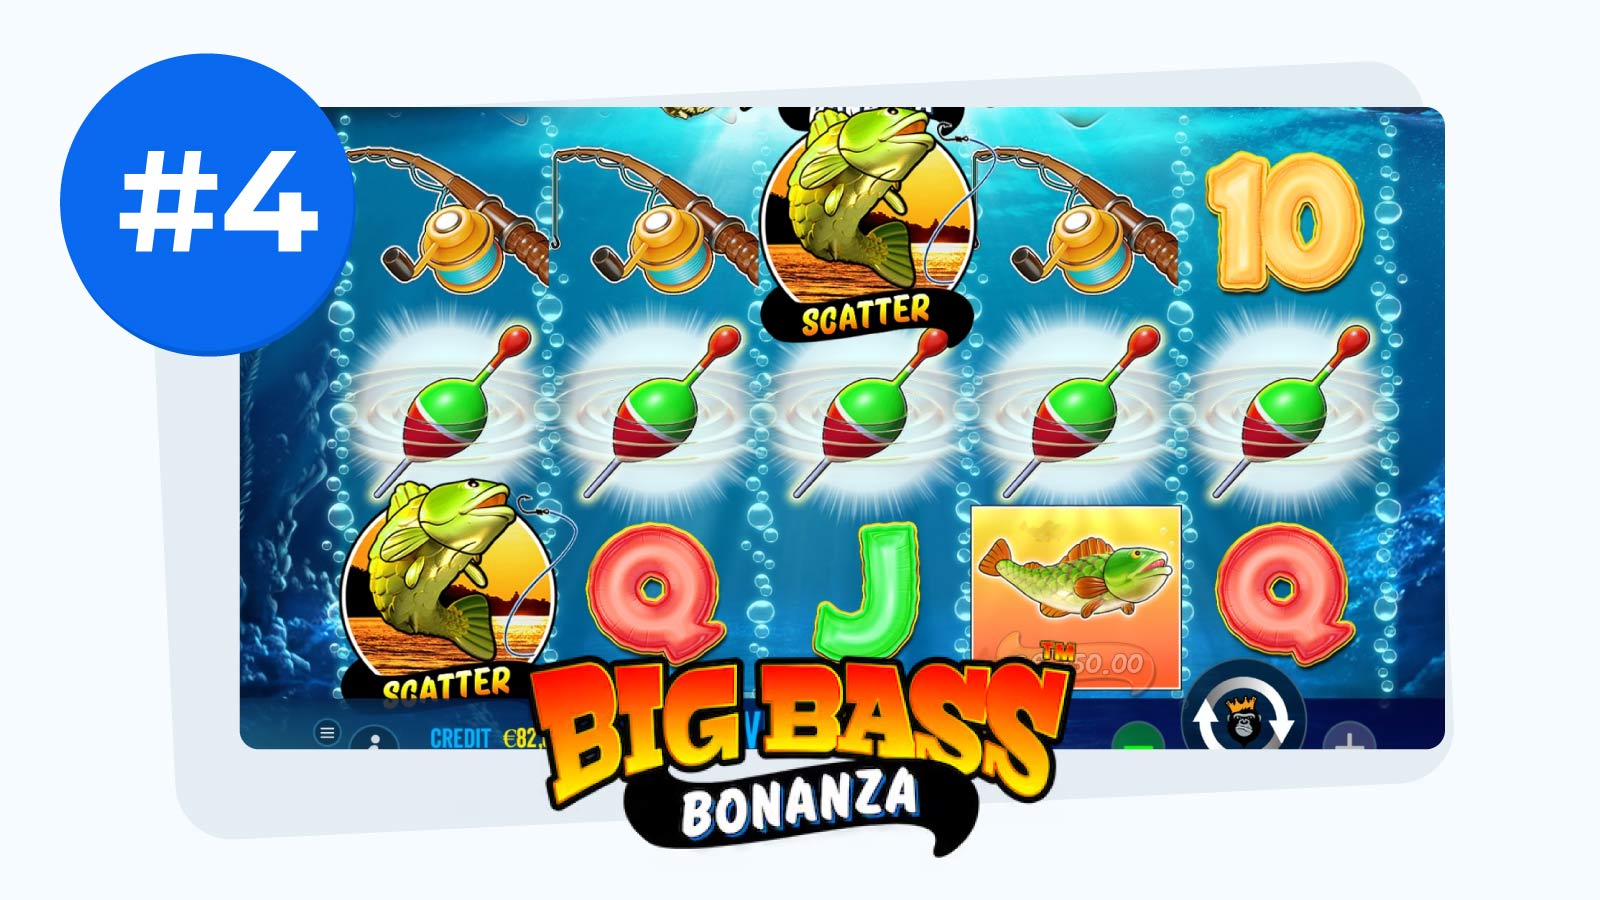 Big Bass Bonanza on Mobile